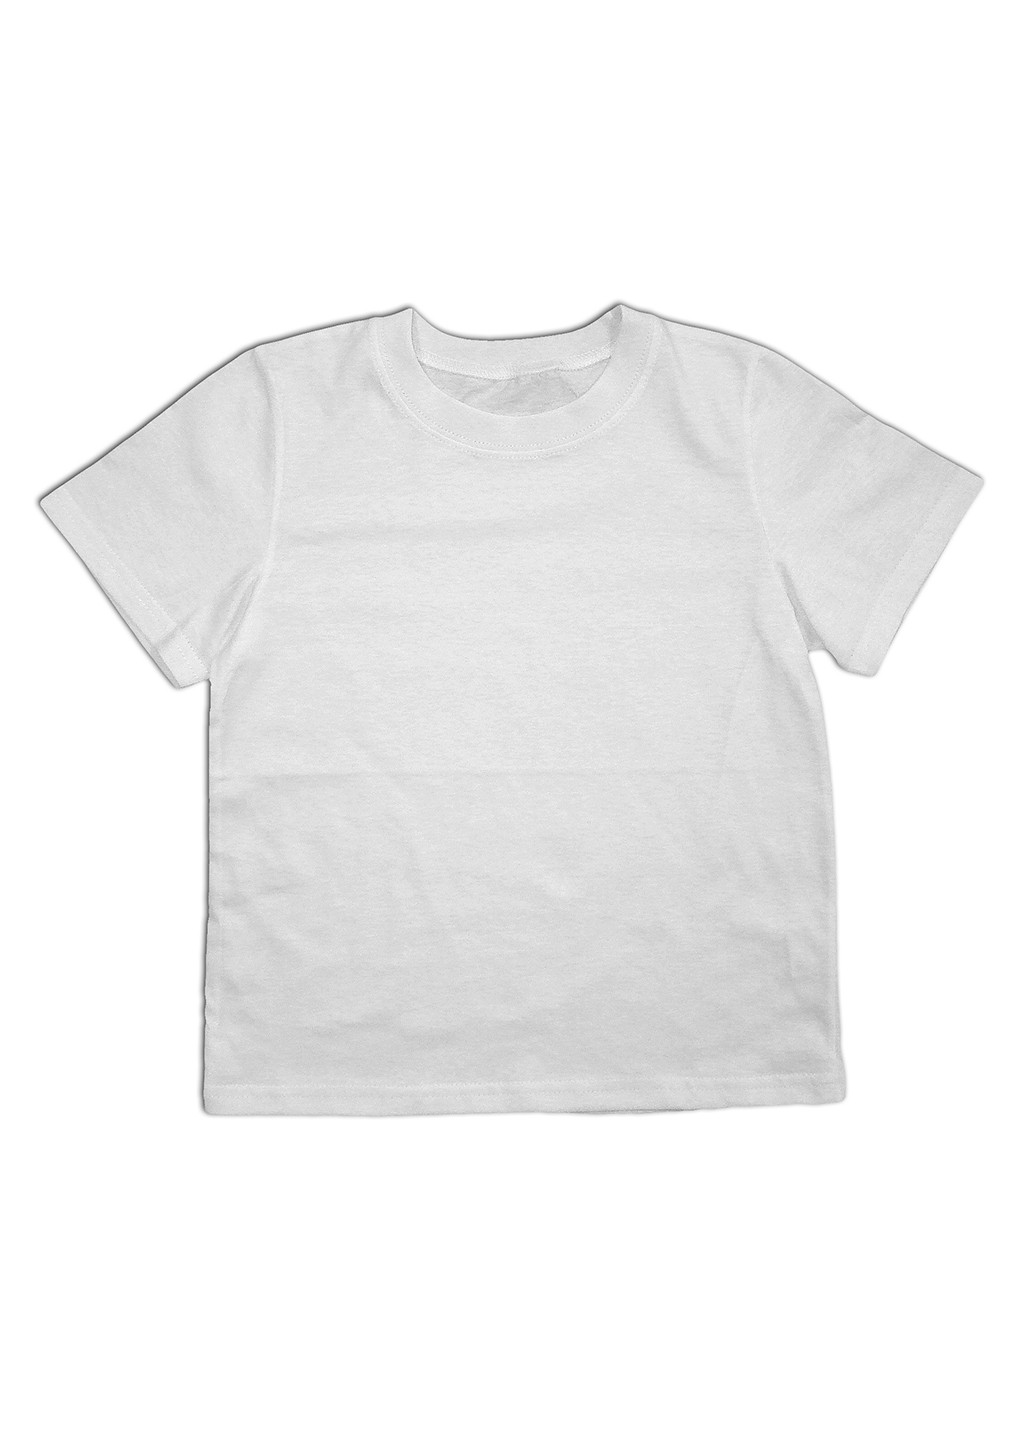 Белая летняя футболка с коротким рукавом AV Style